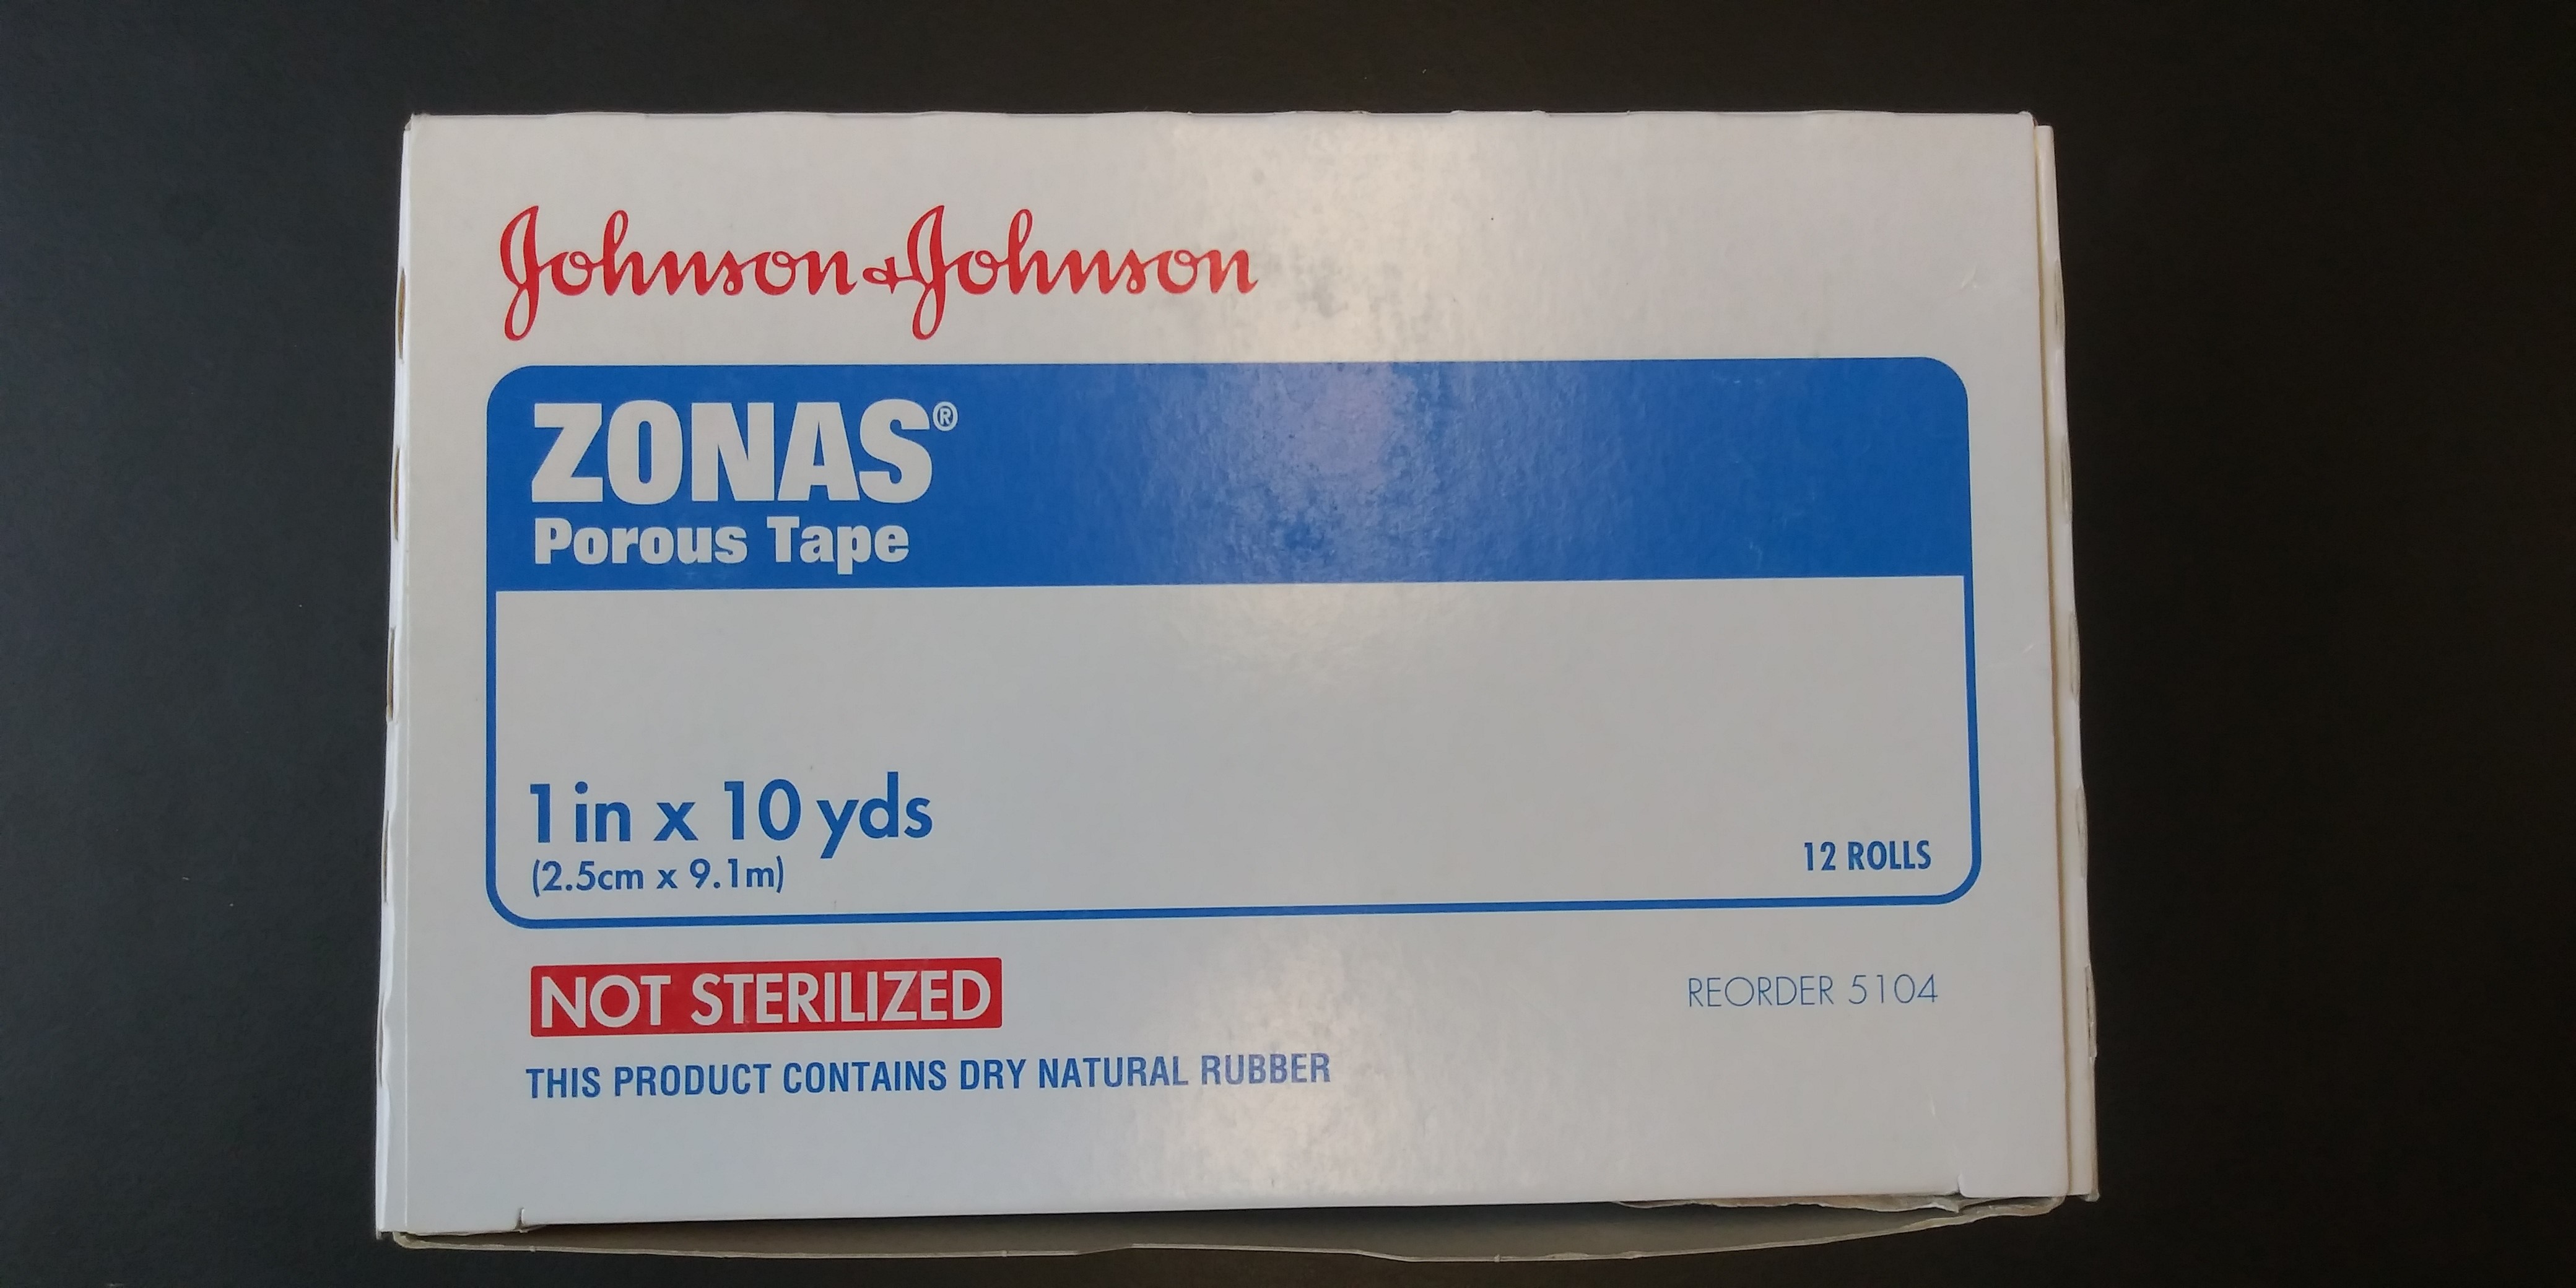 JOHNSON & JOHNSON 1 in x 10 yards Zonas Porous Tape, Box of 12 rolls